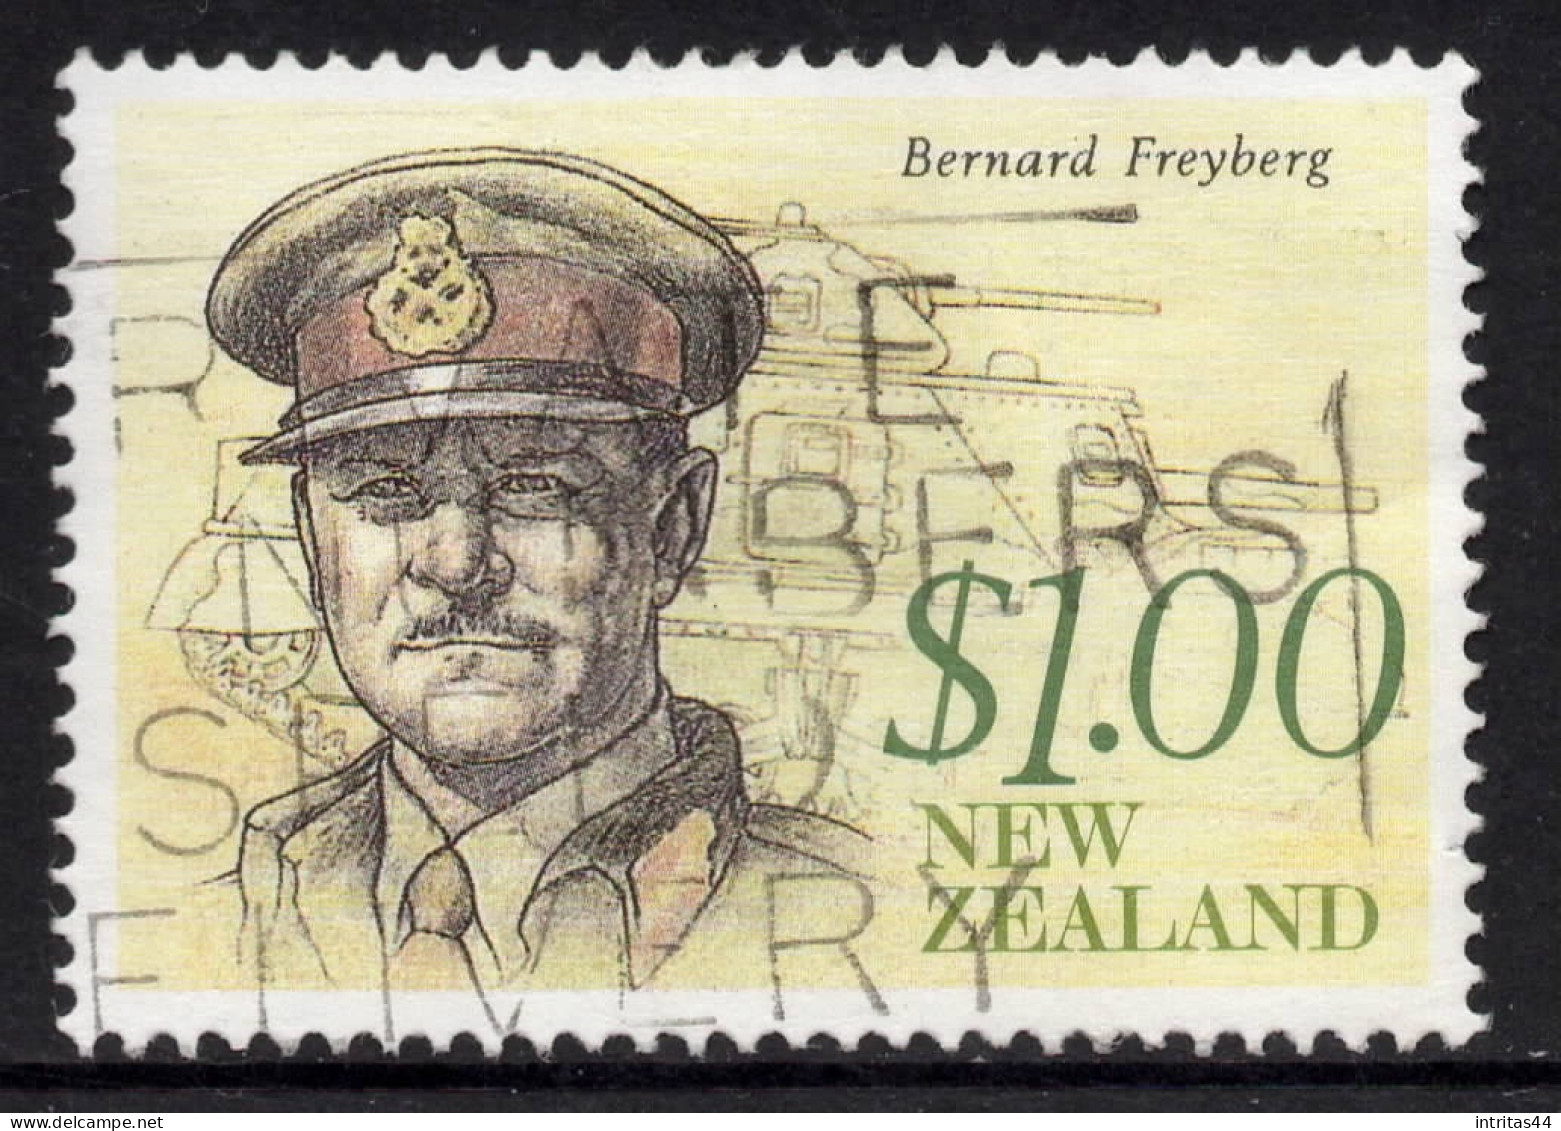 NEW ZEALAND 1990 HERITAGE-THE ACHIEVERS  $1.00 " FREYBERG "  STAMP VFU - Oblitérés